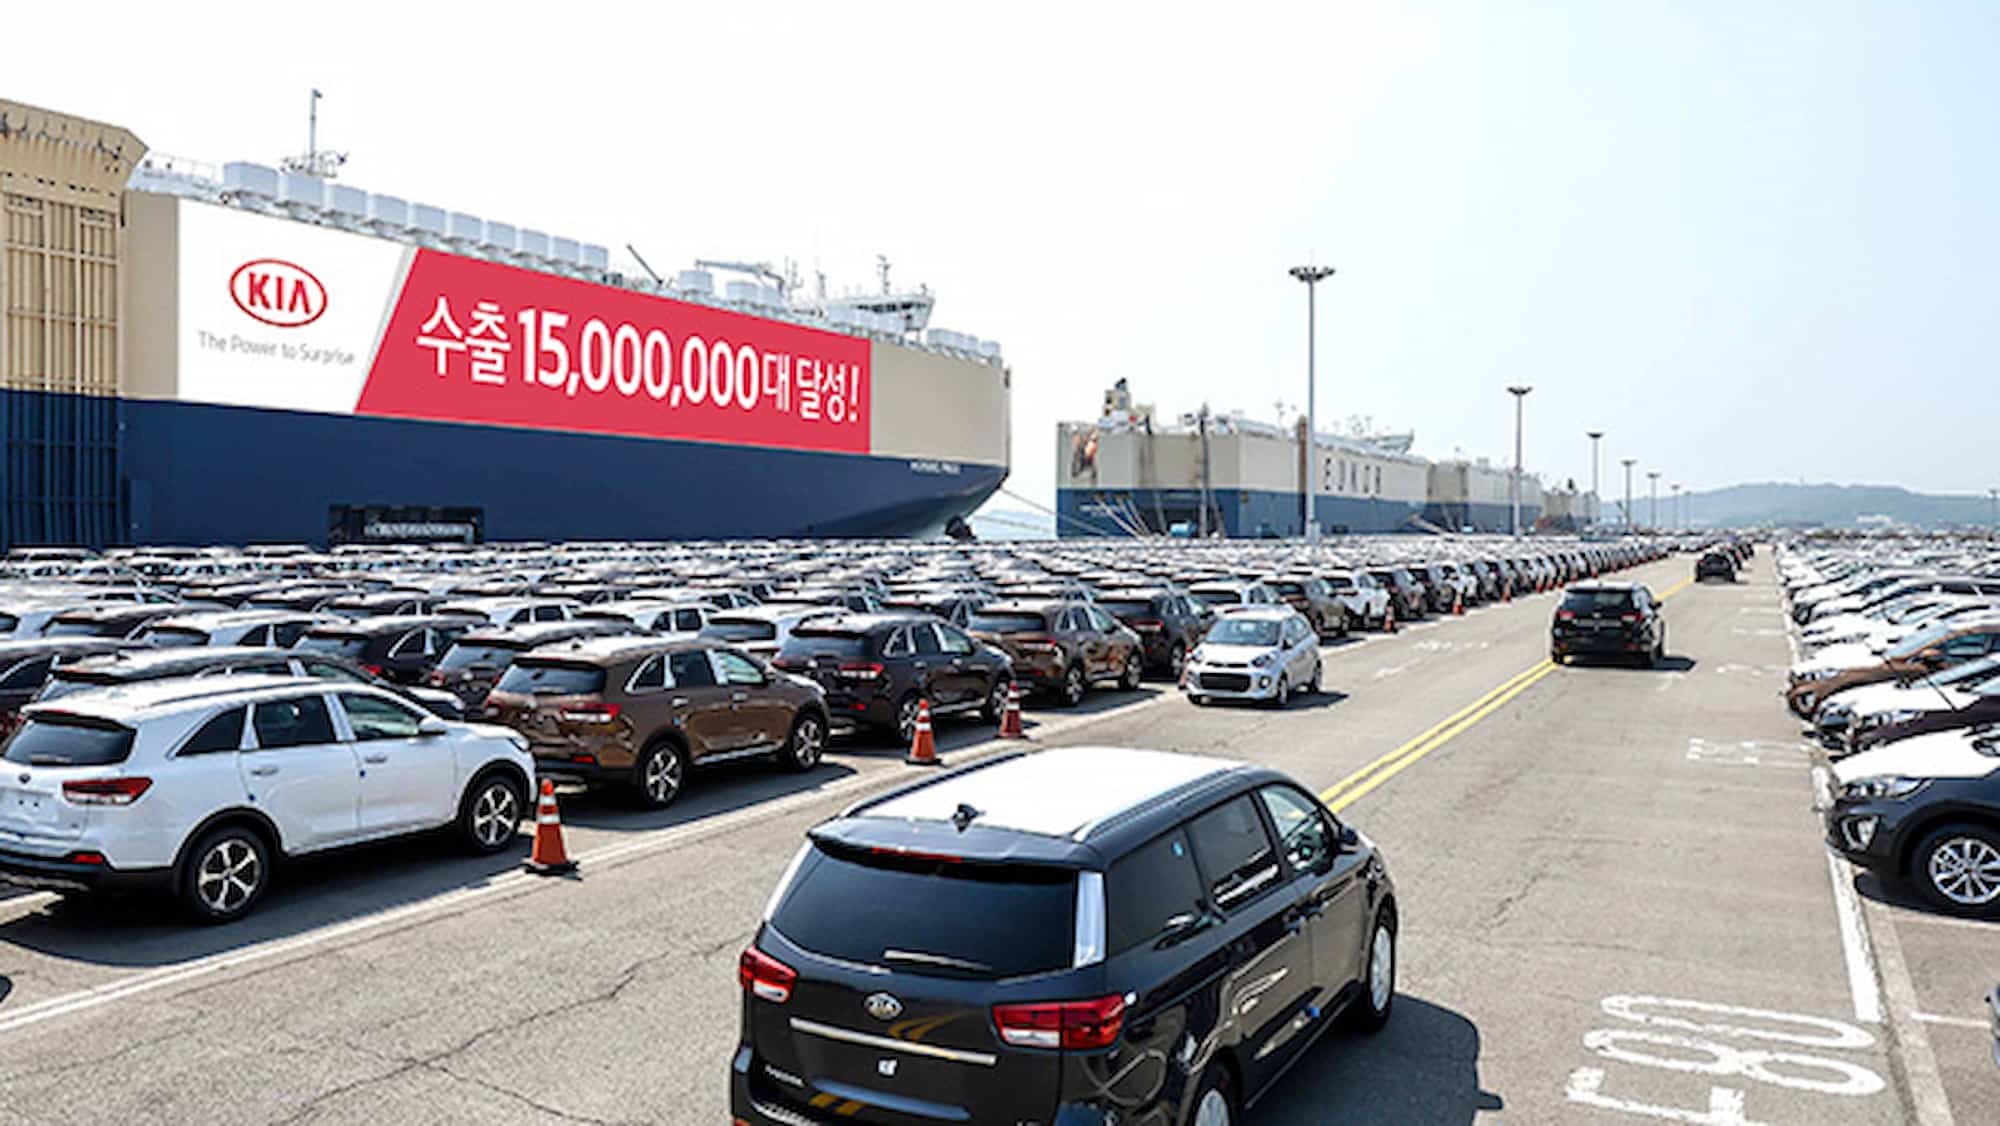 KIA Exports 15million vehicles